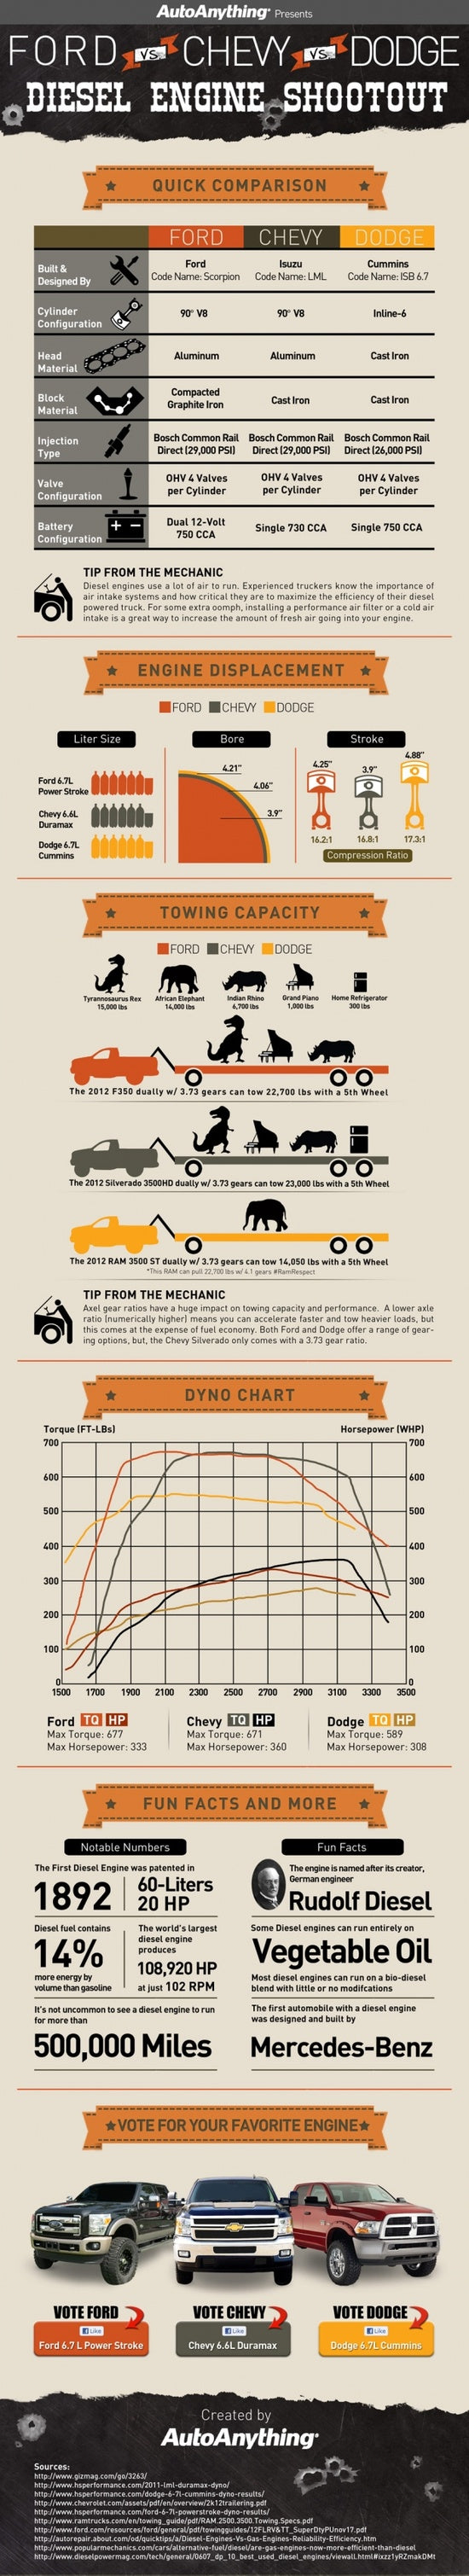 Chevy Duramax VS Ford Power Stroke VS Dodge Cummins Diesel Shootout Infographic